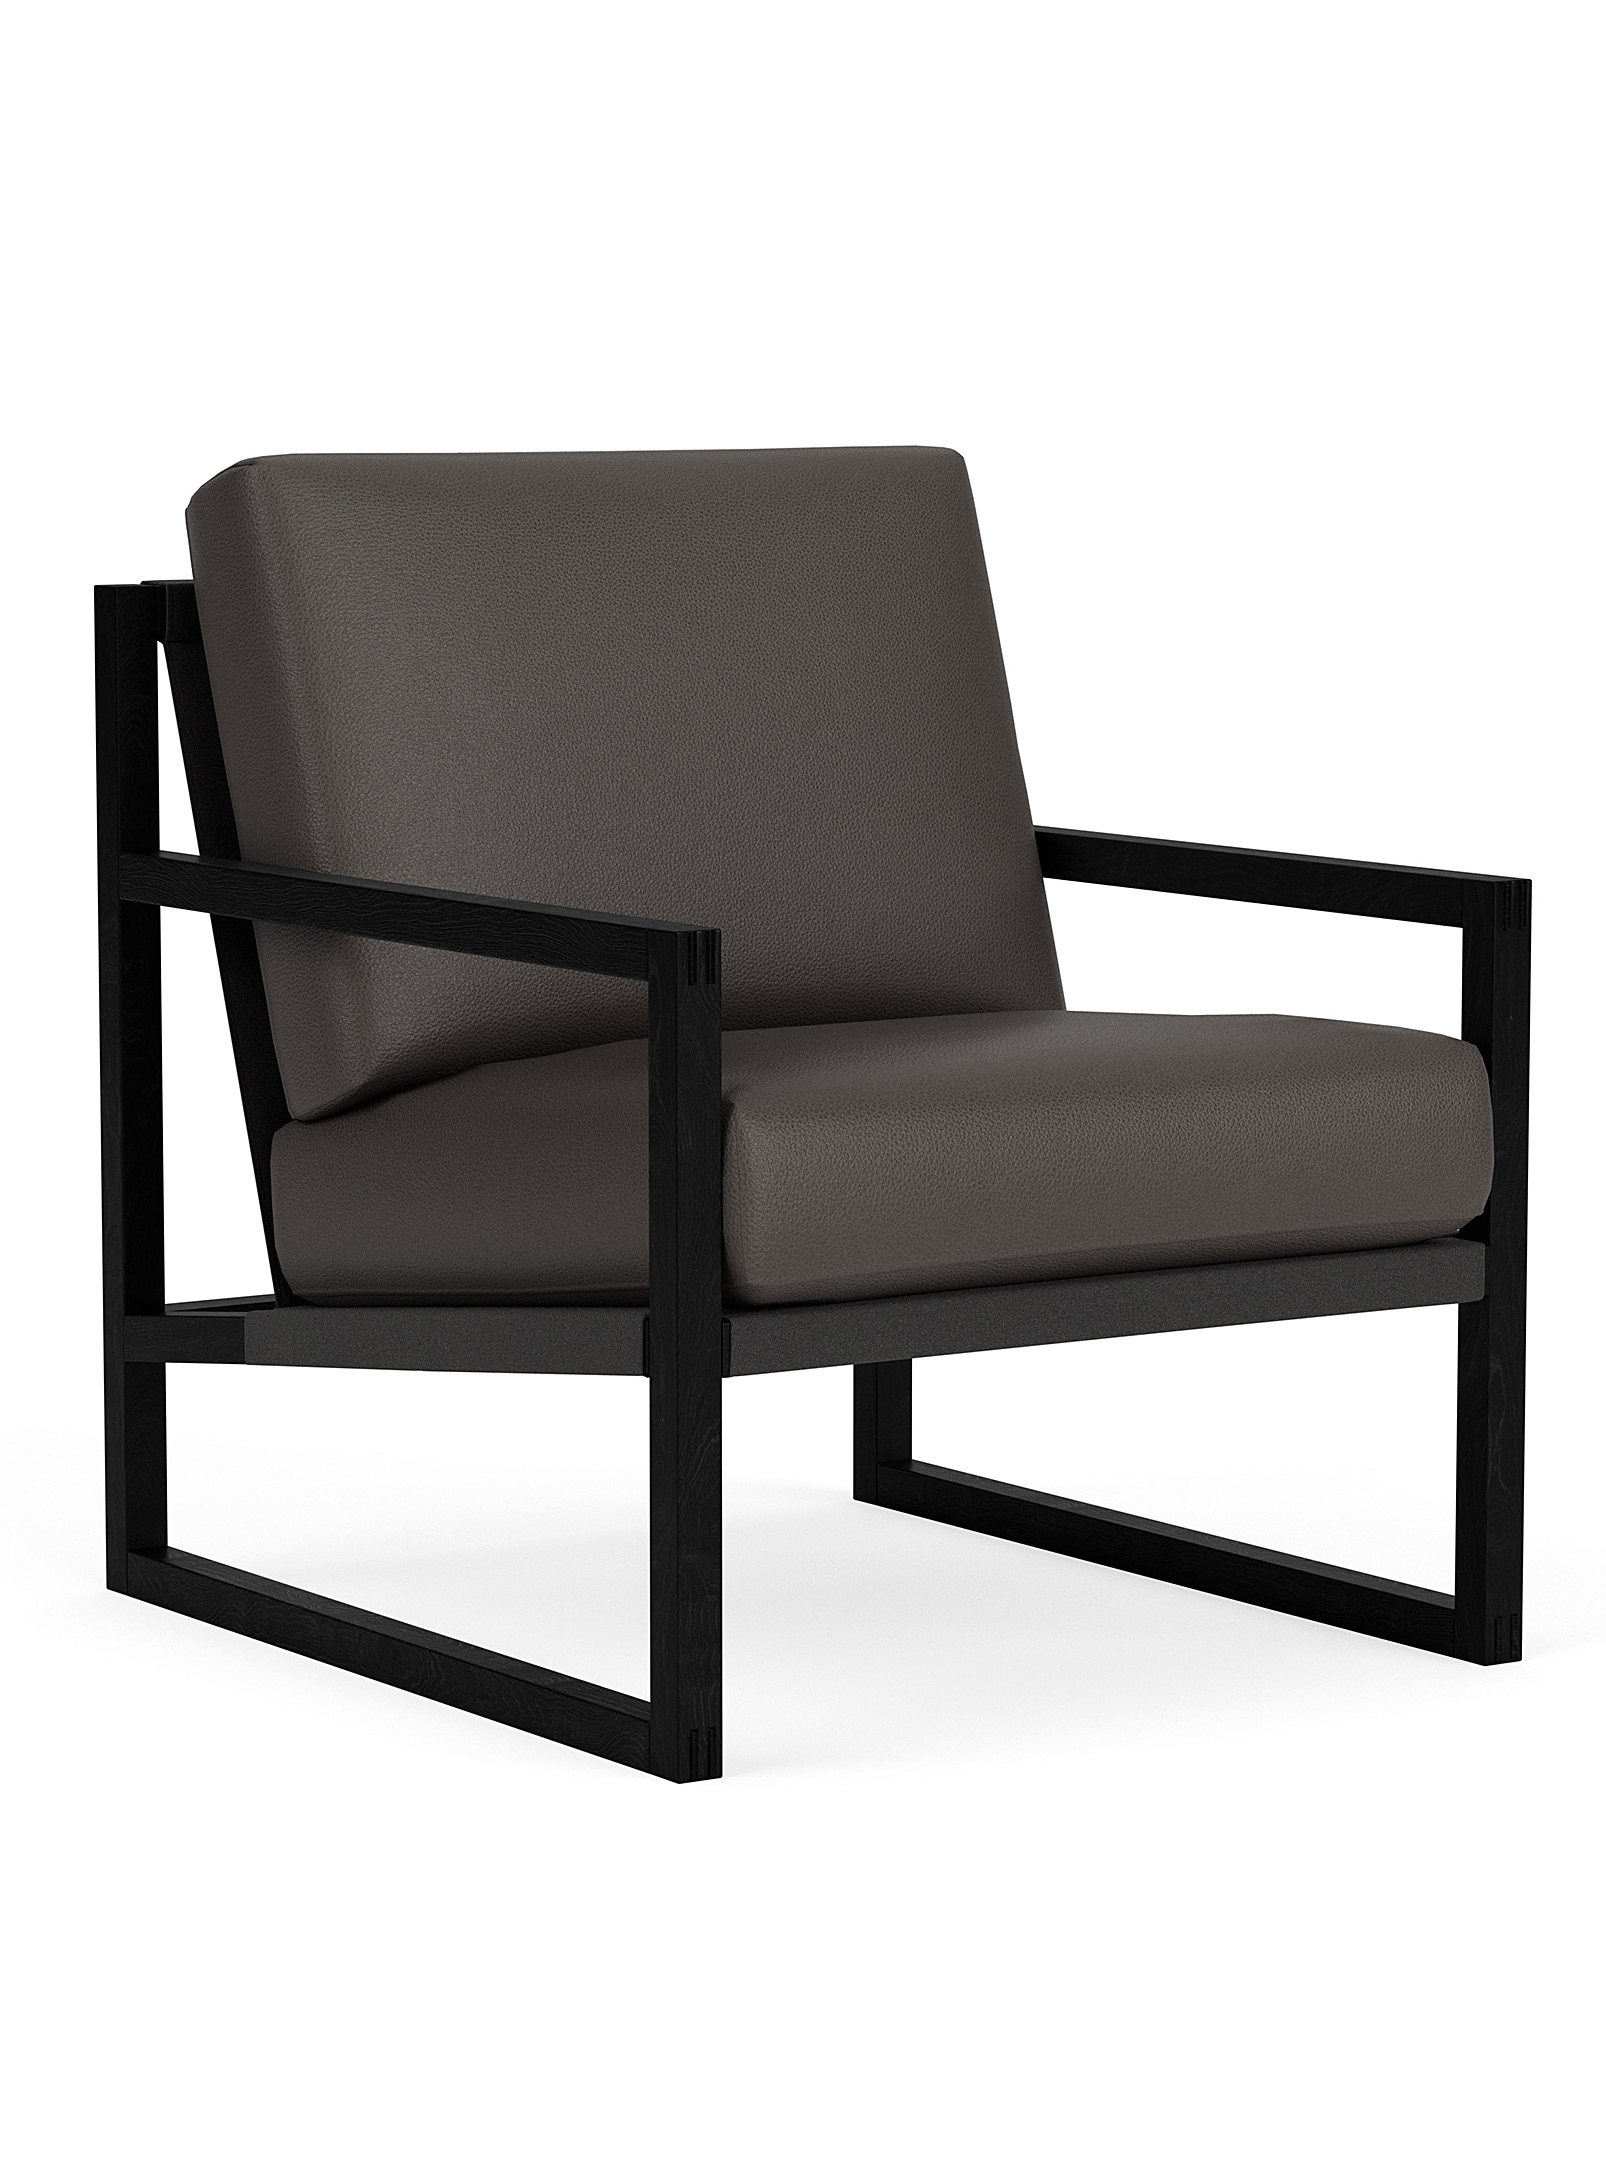 EQ3 - Chocolate leather chair